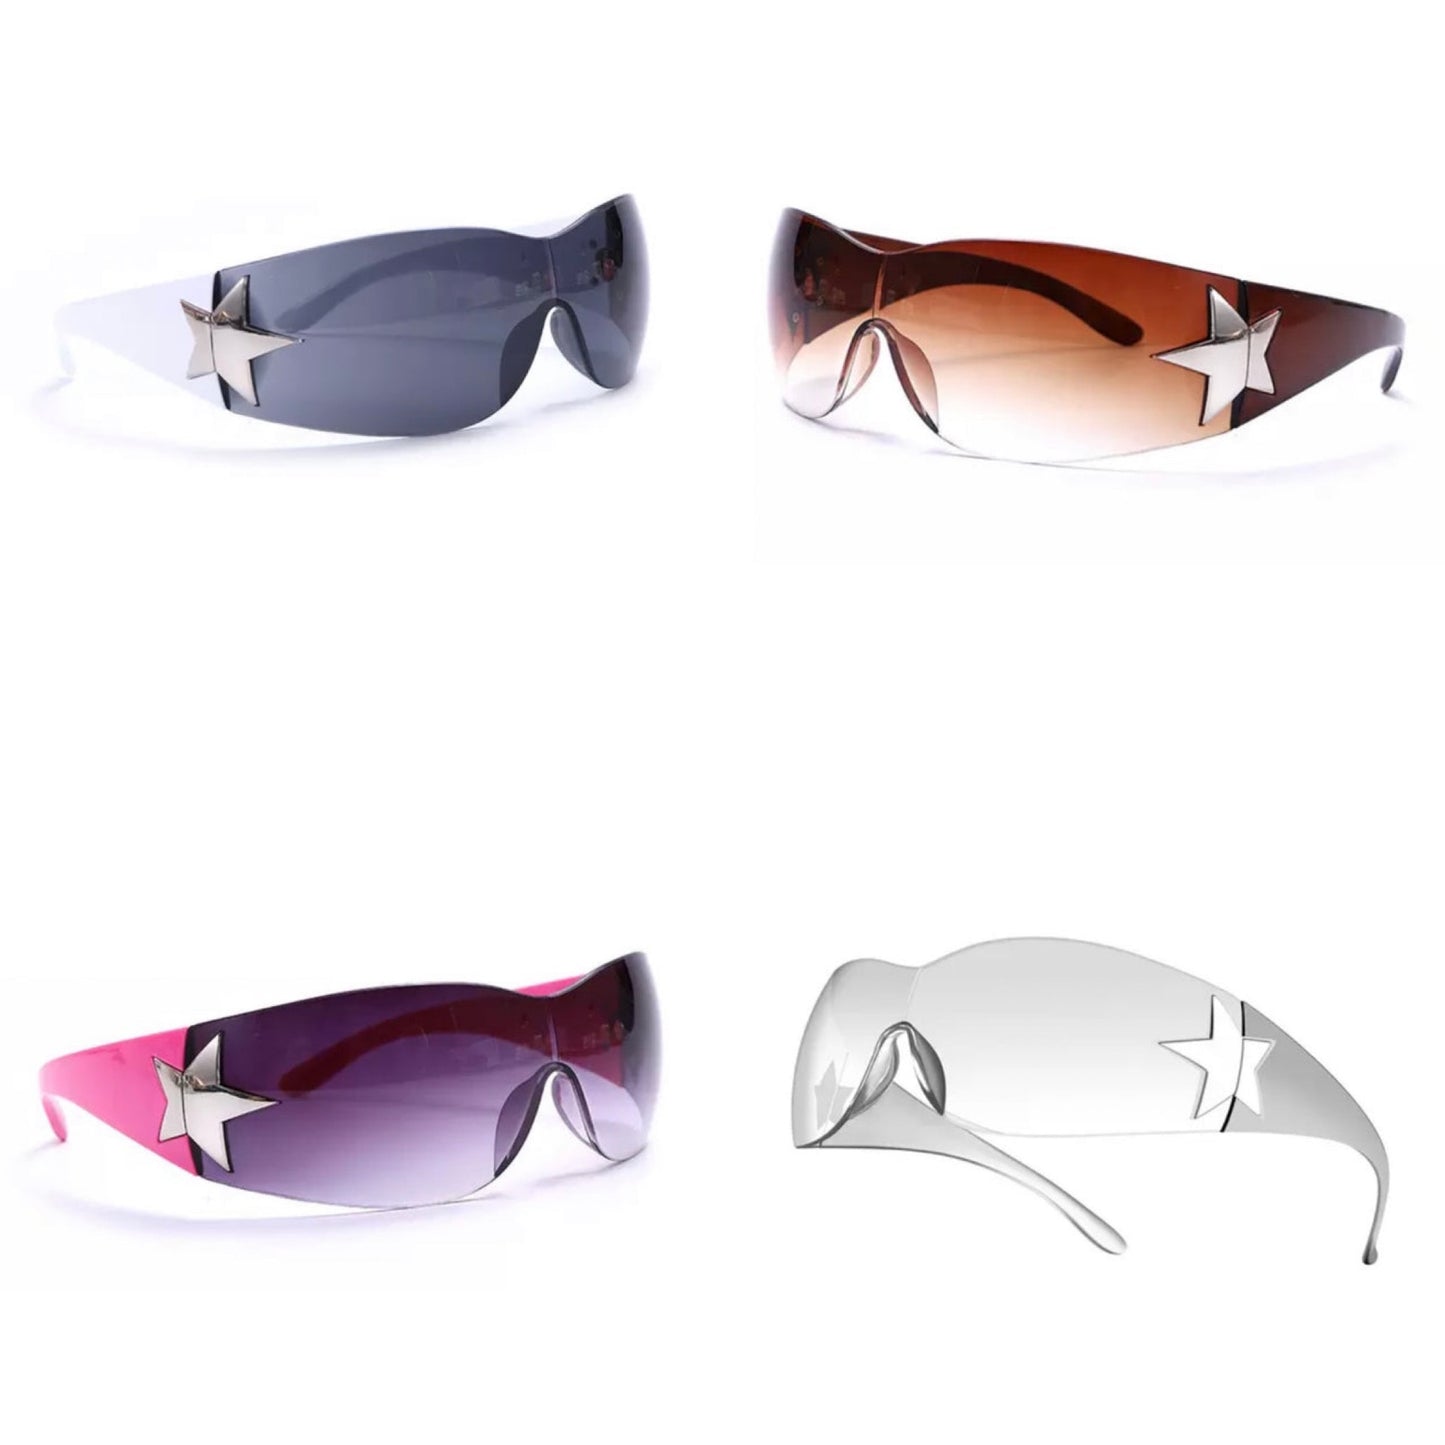 “The Lux” Star Sunglasses